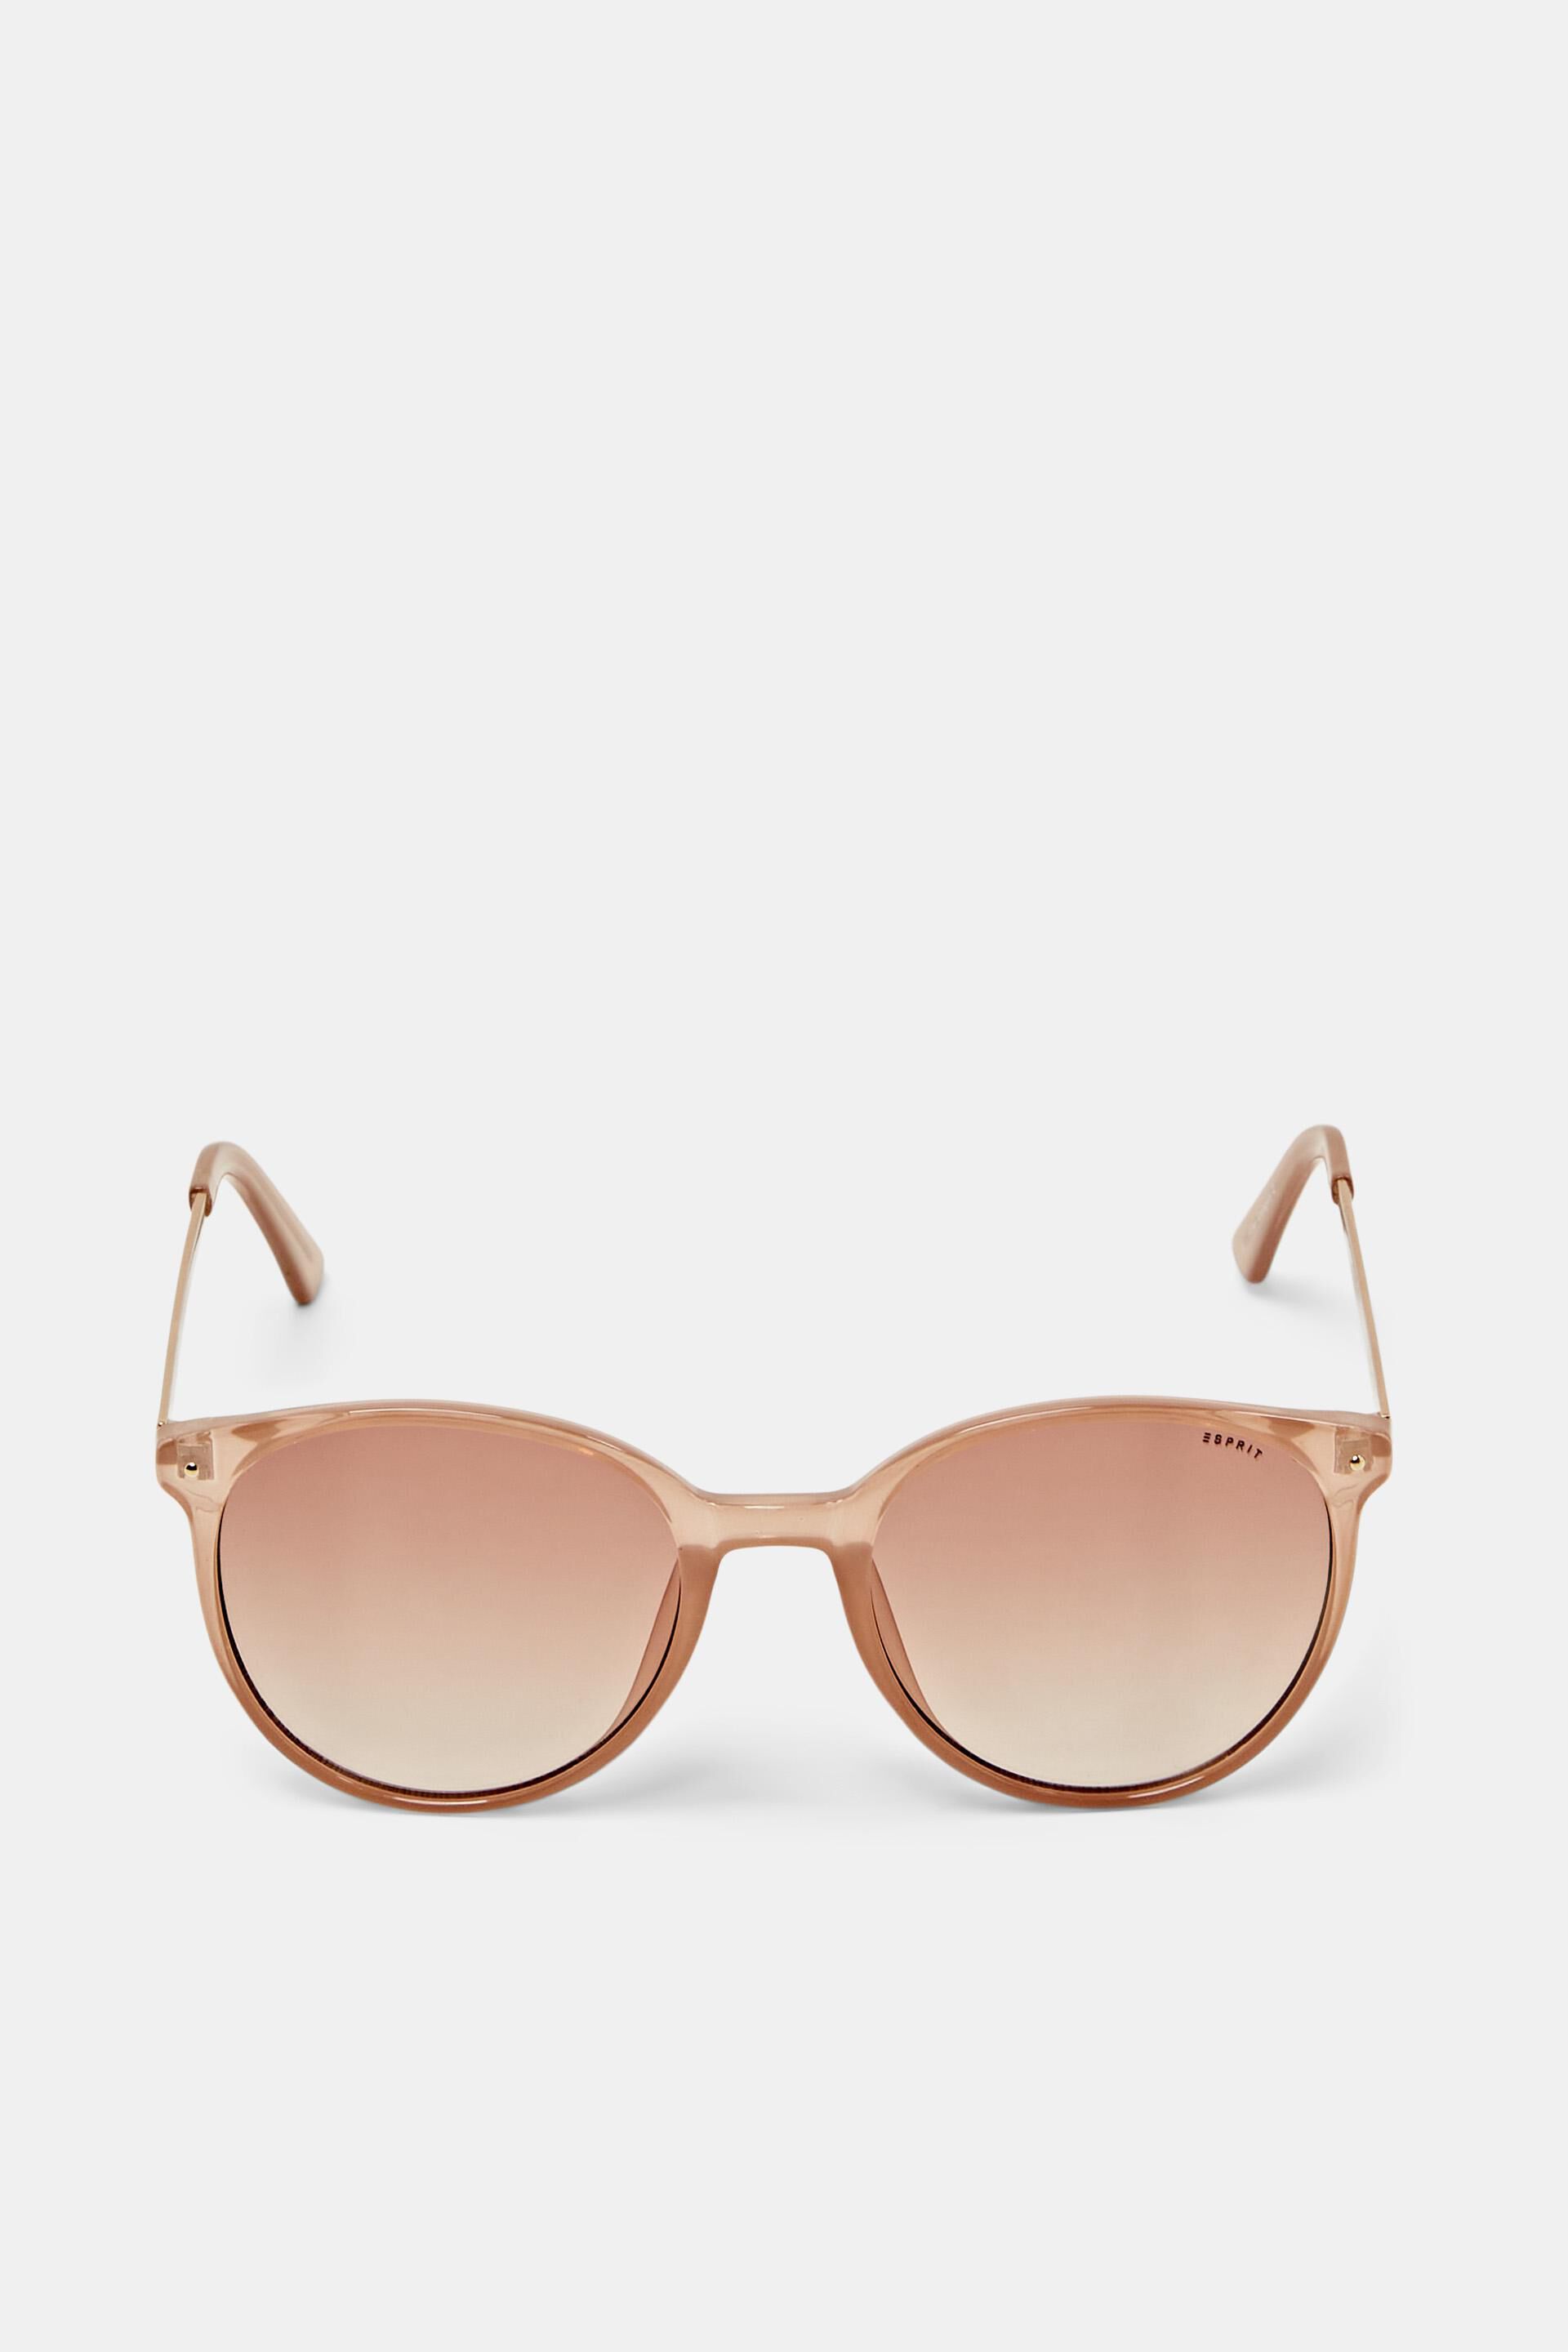 Esprit sunglasses framed Round